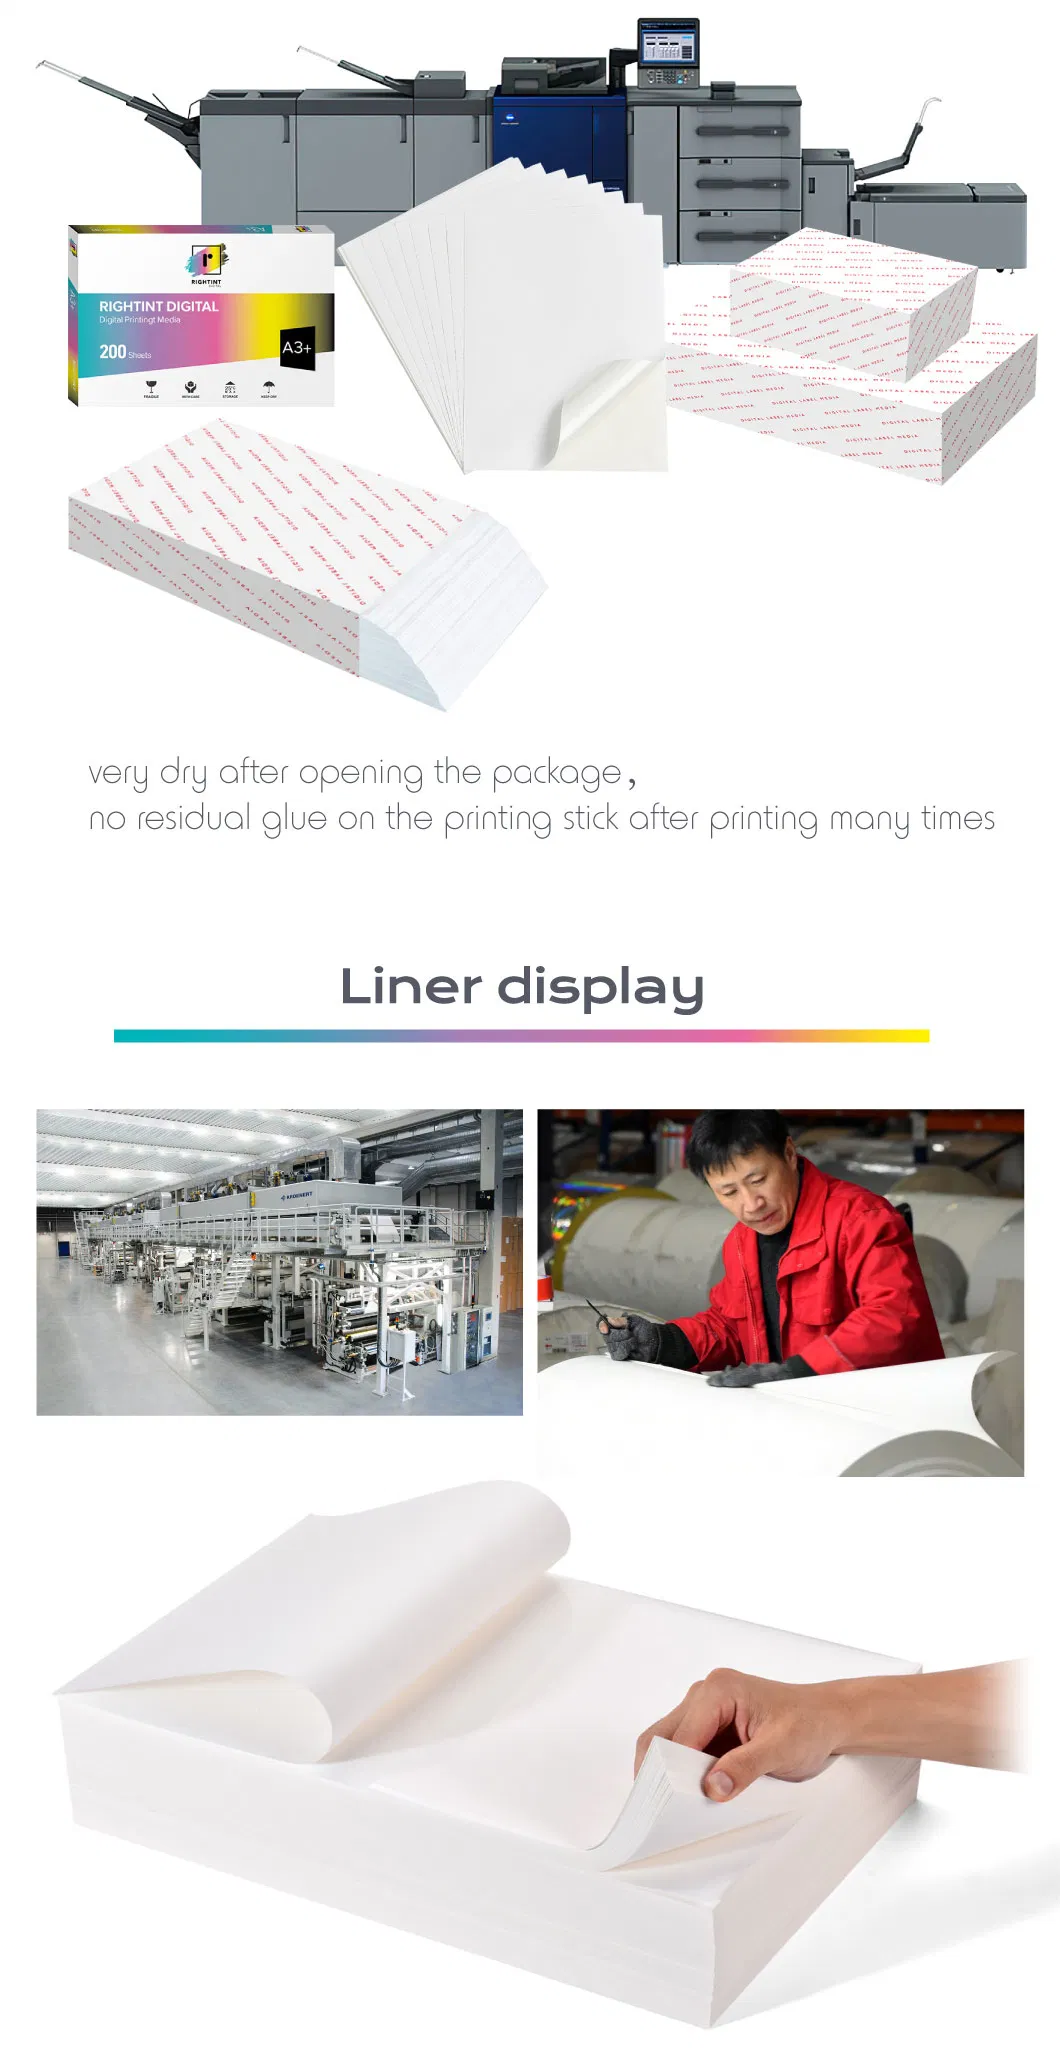 A3, A3+, OEM Digital Printing Rightint china wholesale premium label